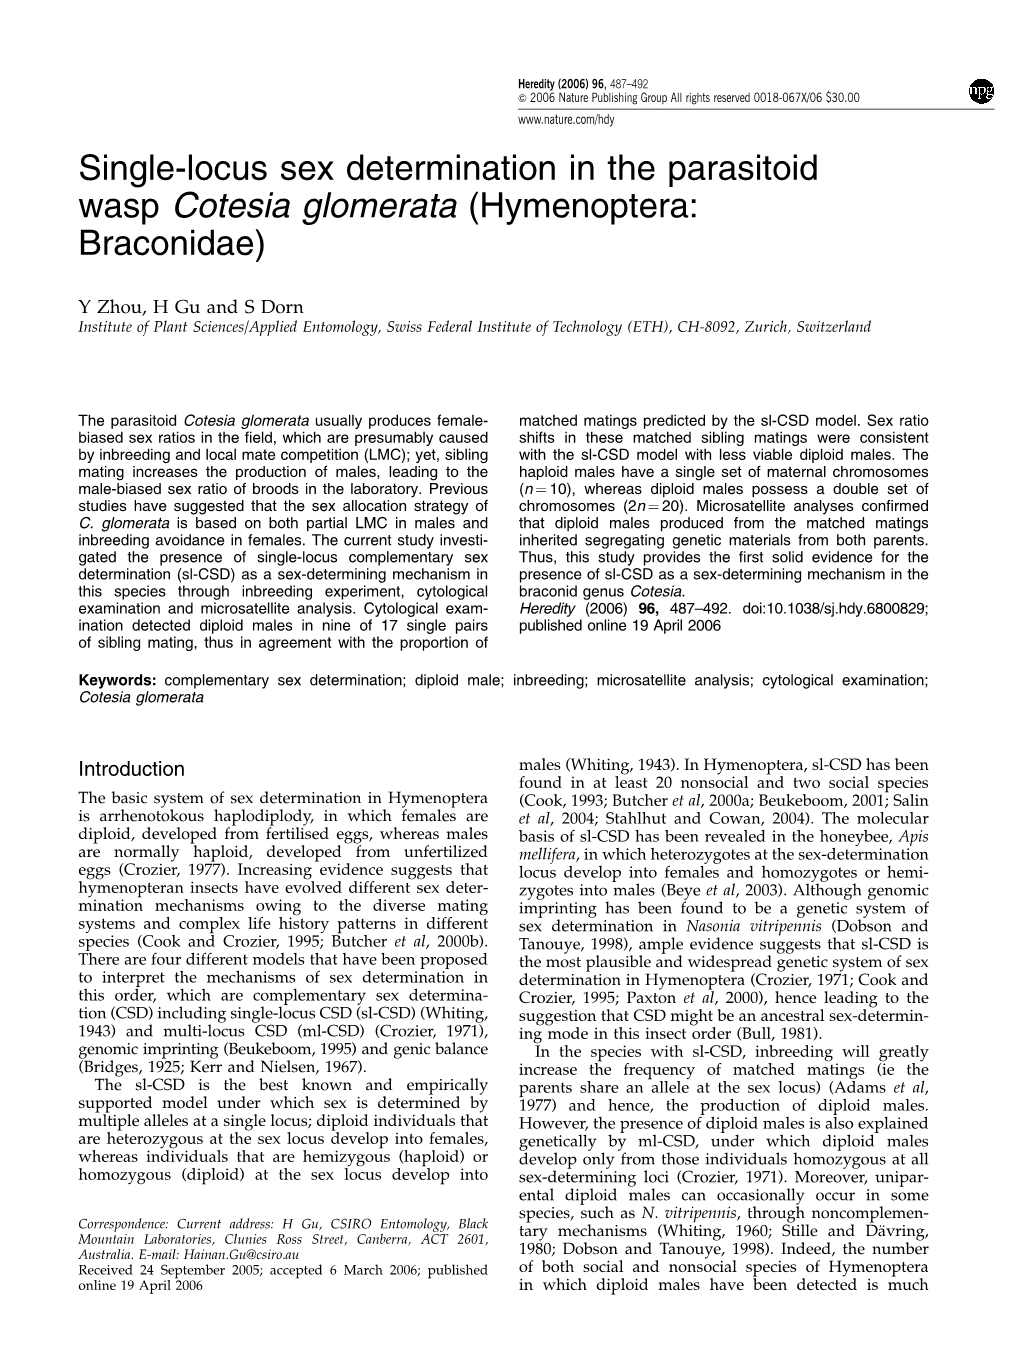 Single-Locus Sex Determination in the Parasitoid Wasp Cotesia Glomerata (Hymenoptera: Braconidae)